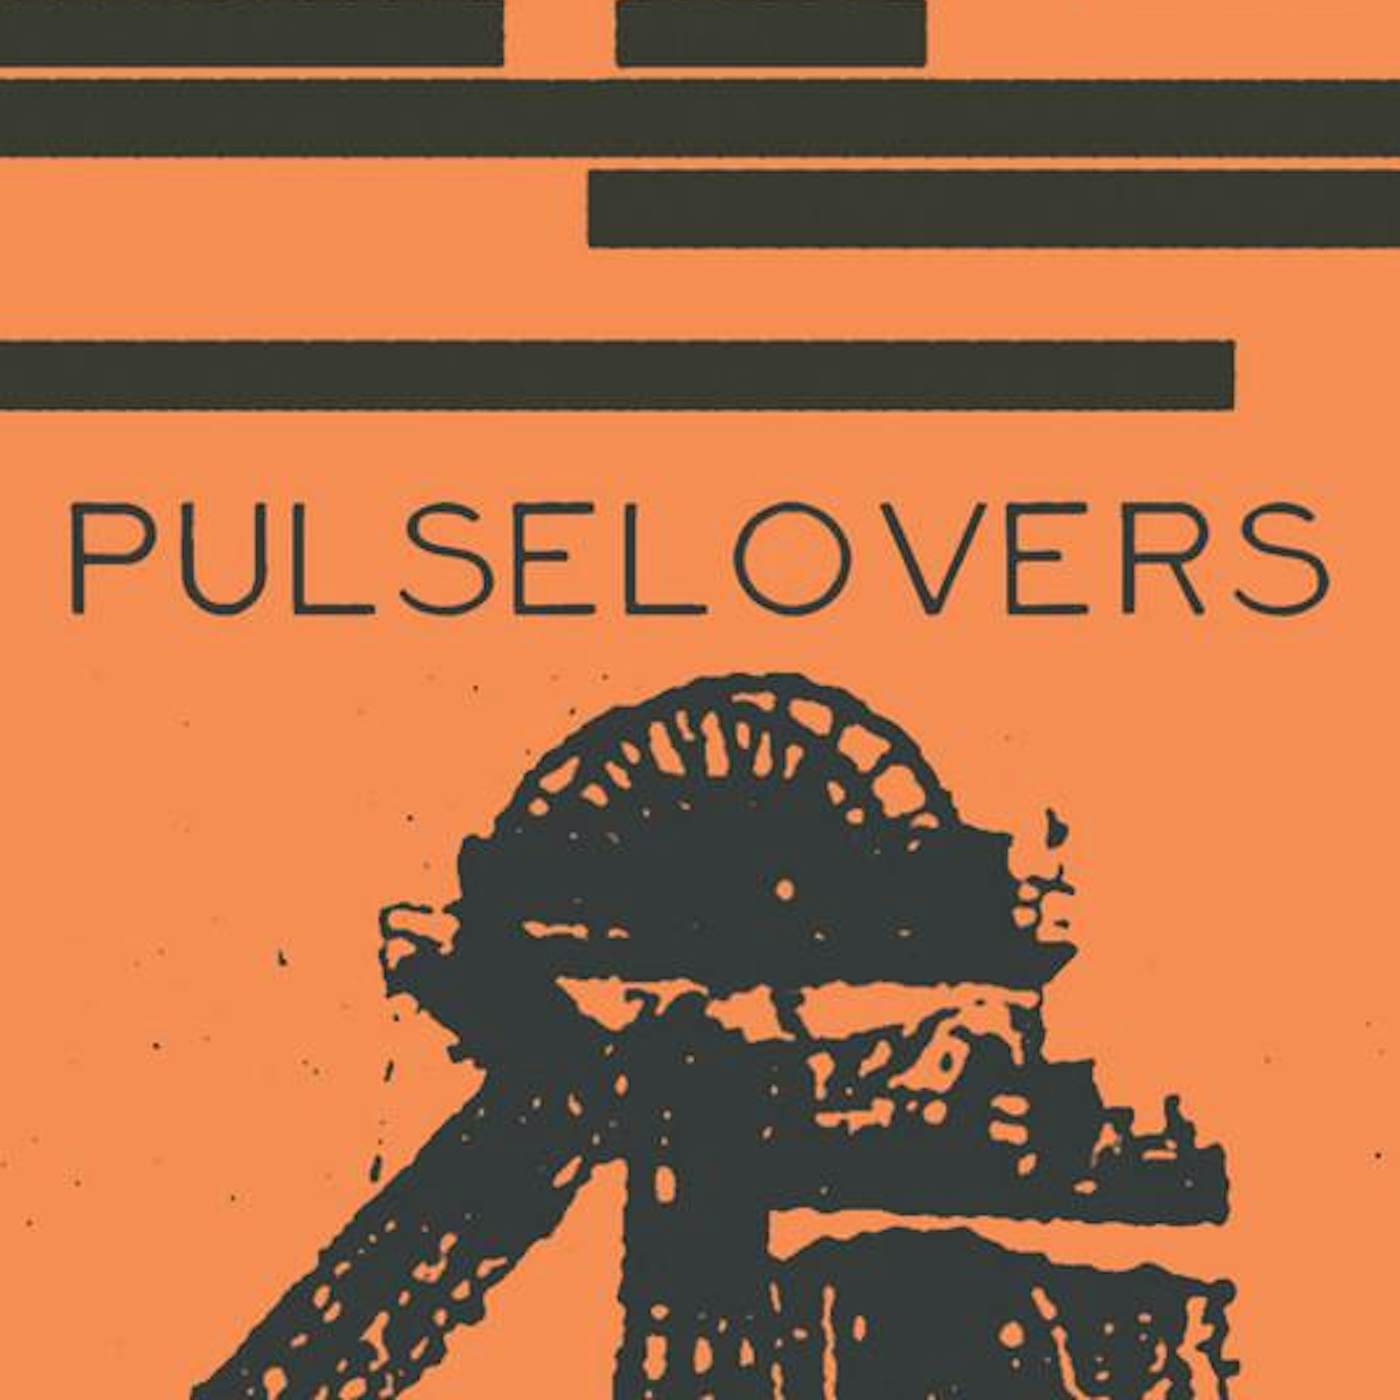 Pulselovers